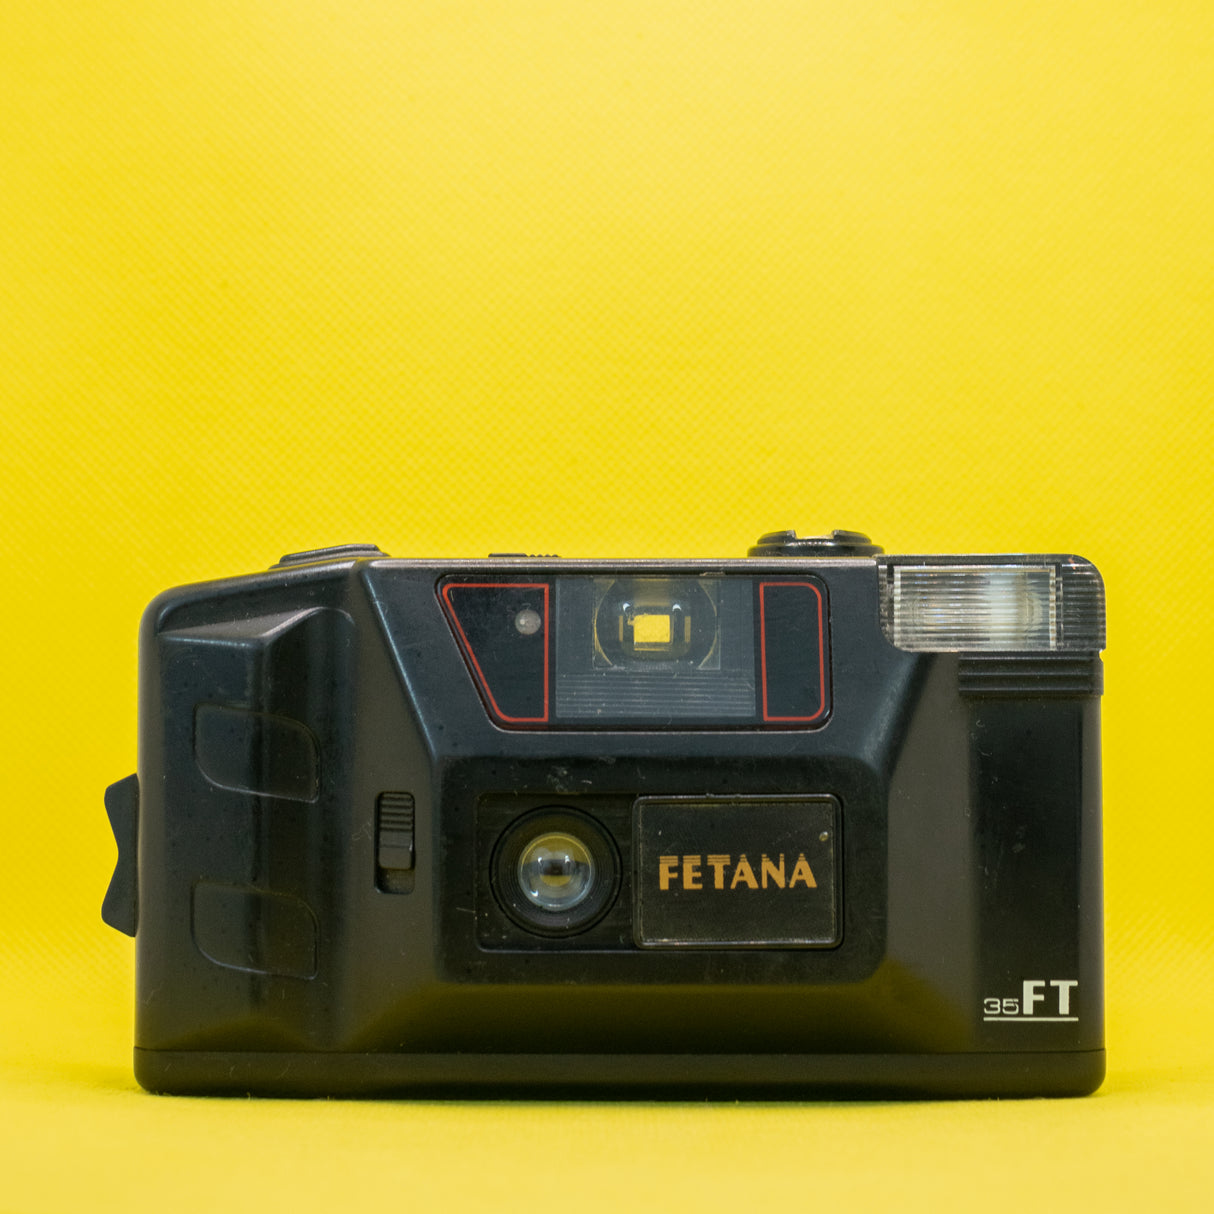 Fetana - Macchina fotografica a pellicola 35mm vintage